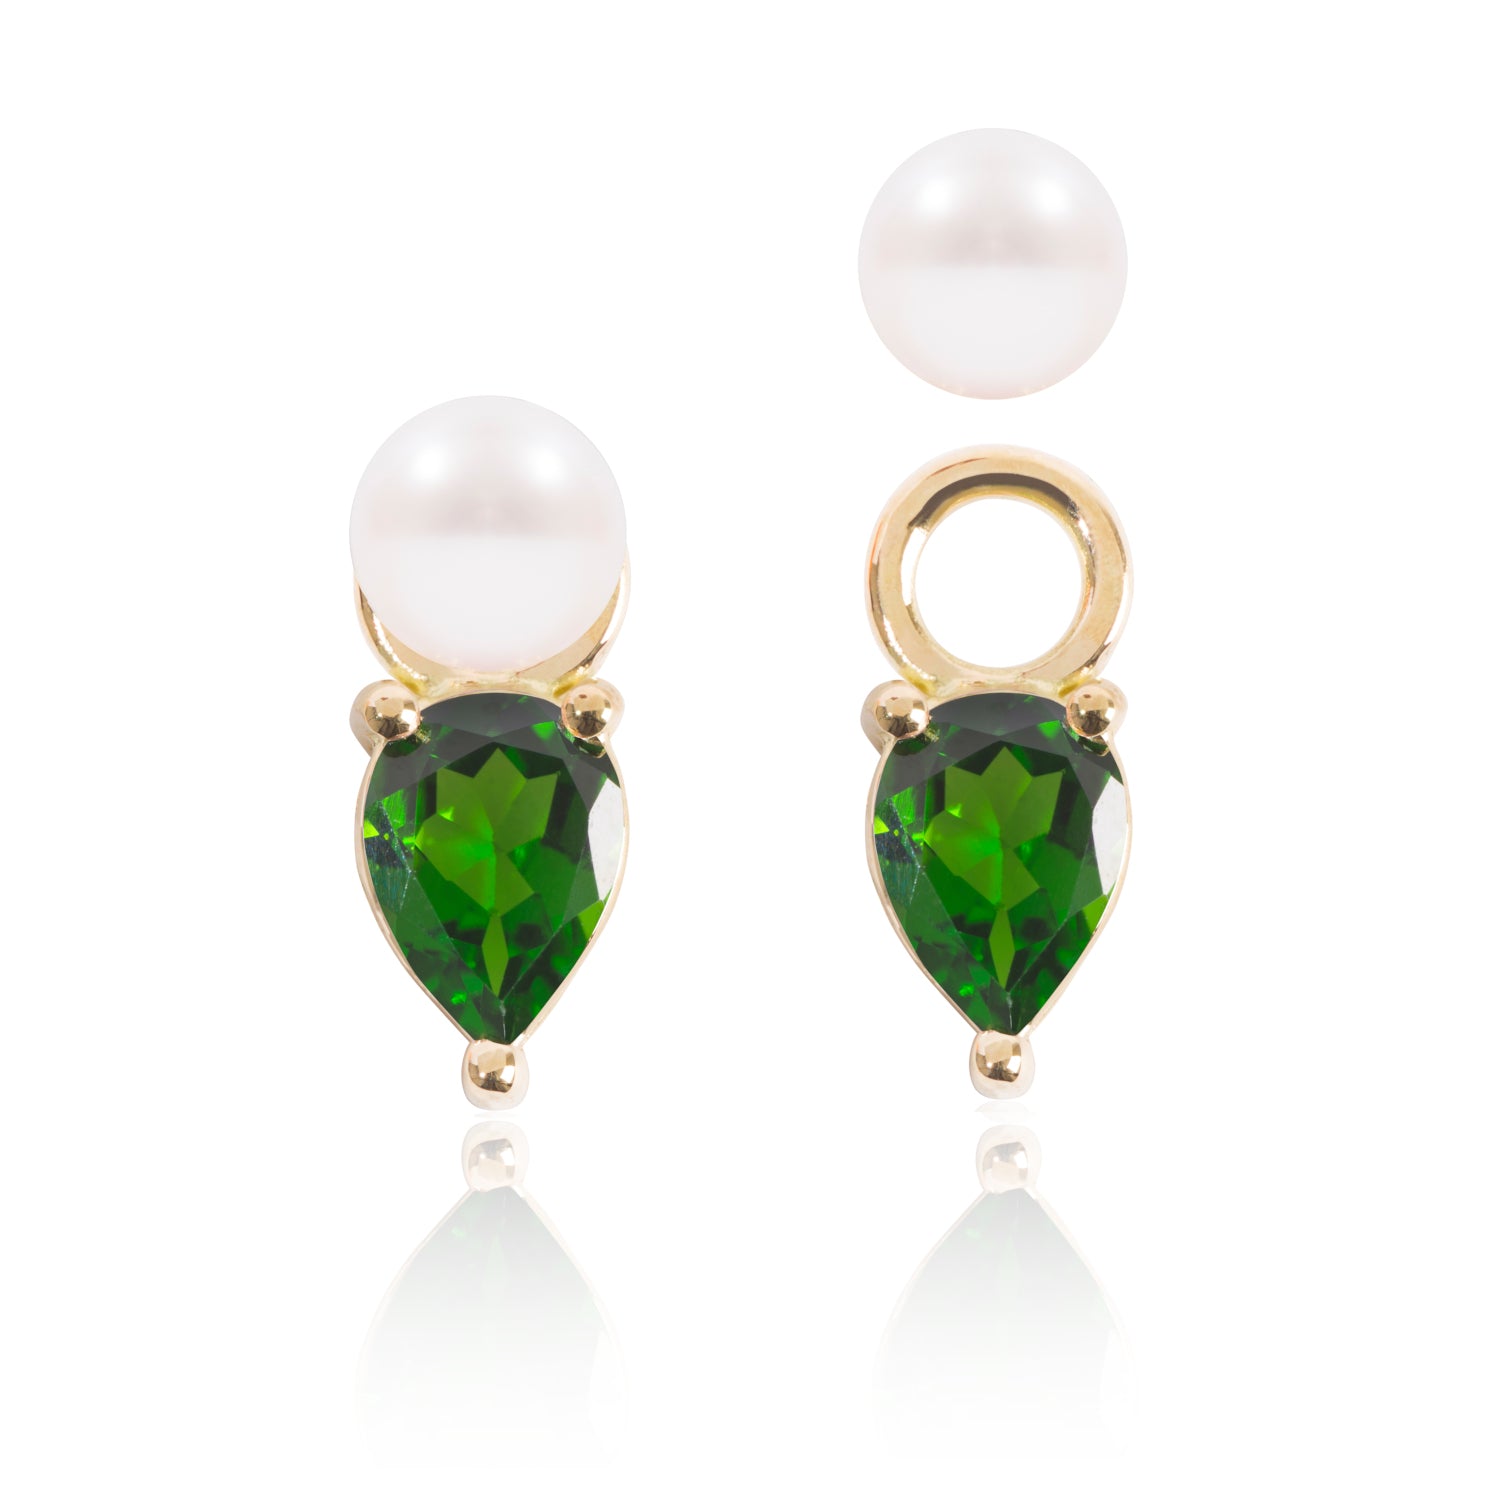 Mini Pearl and Tsavorite Earring Pendants with one detached by McFarlane Fine Jewellery